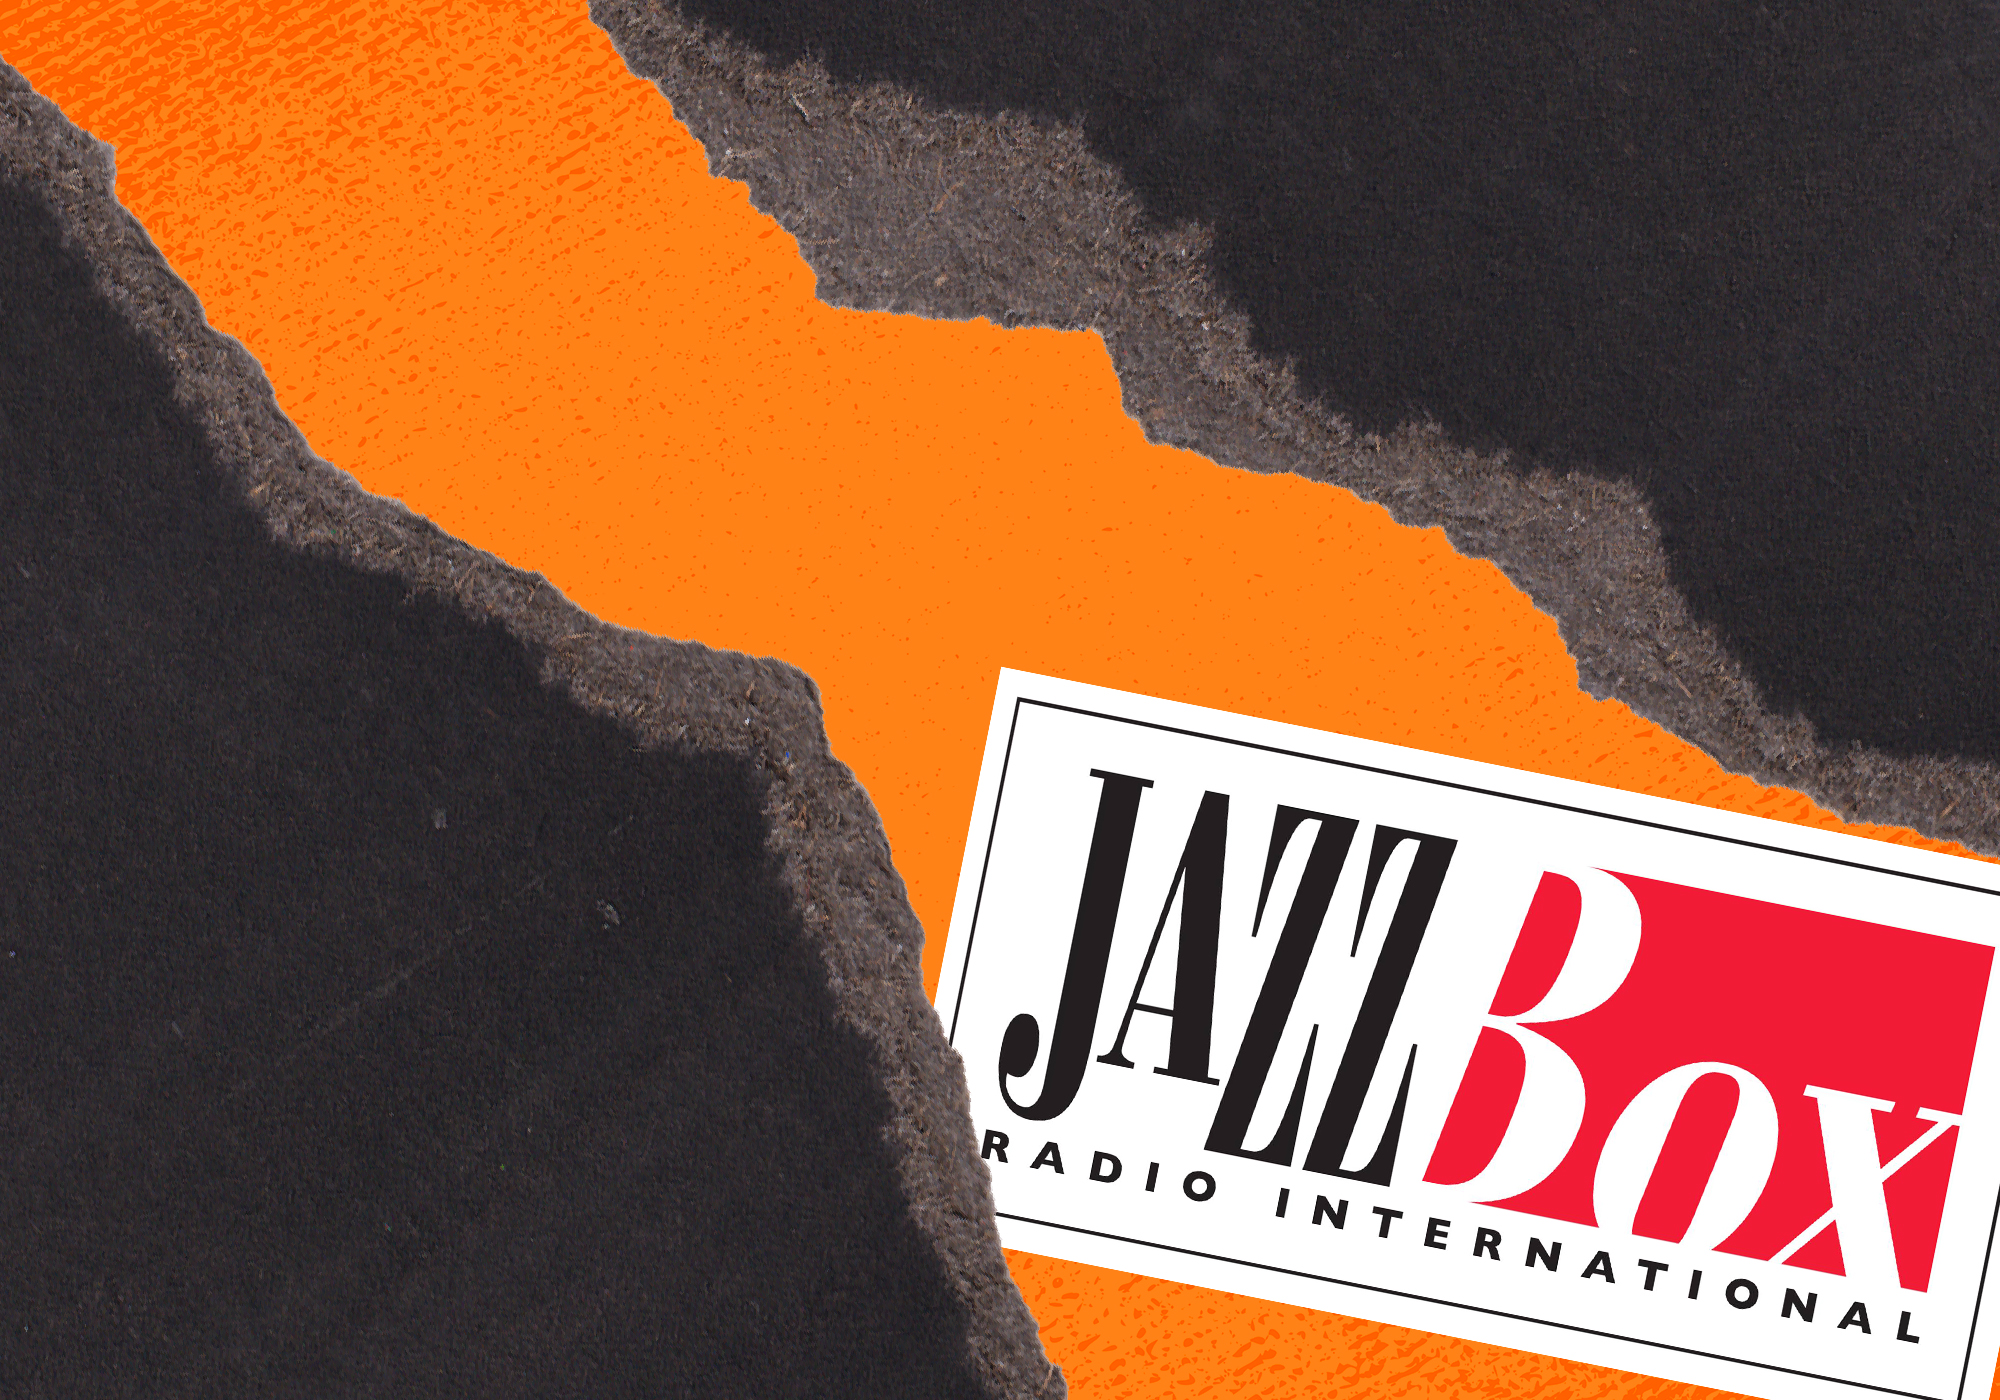 Jazz Box International